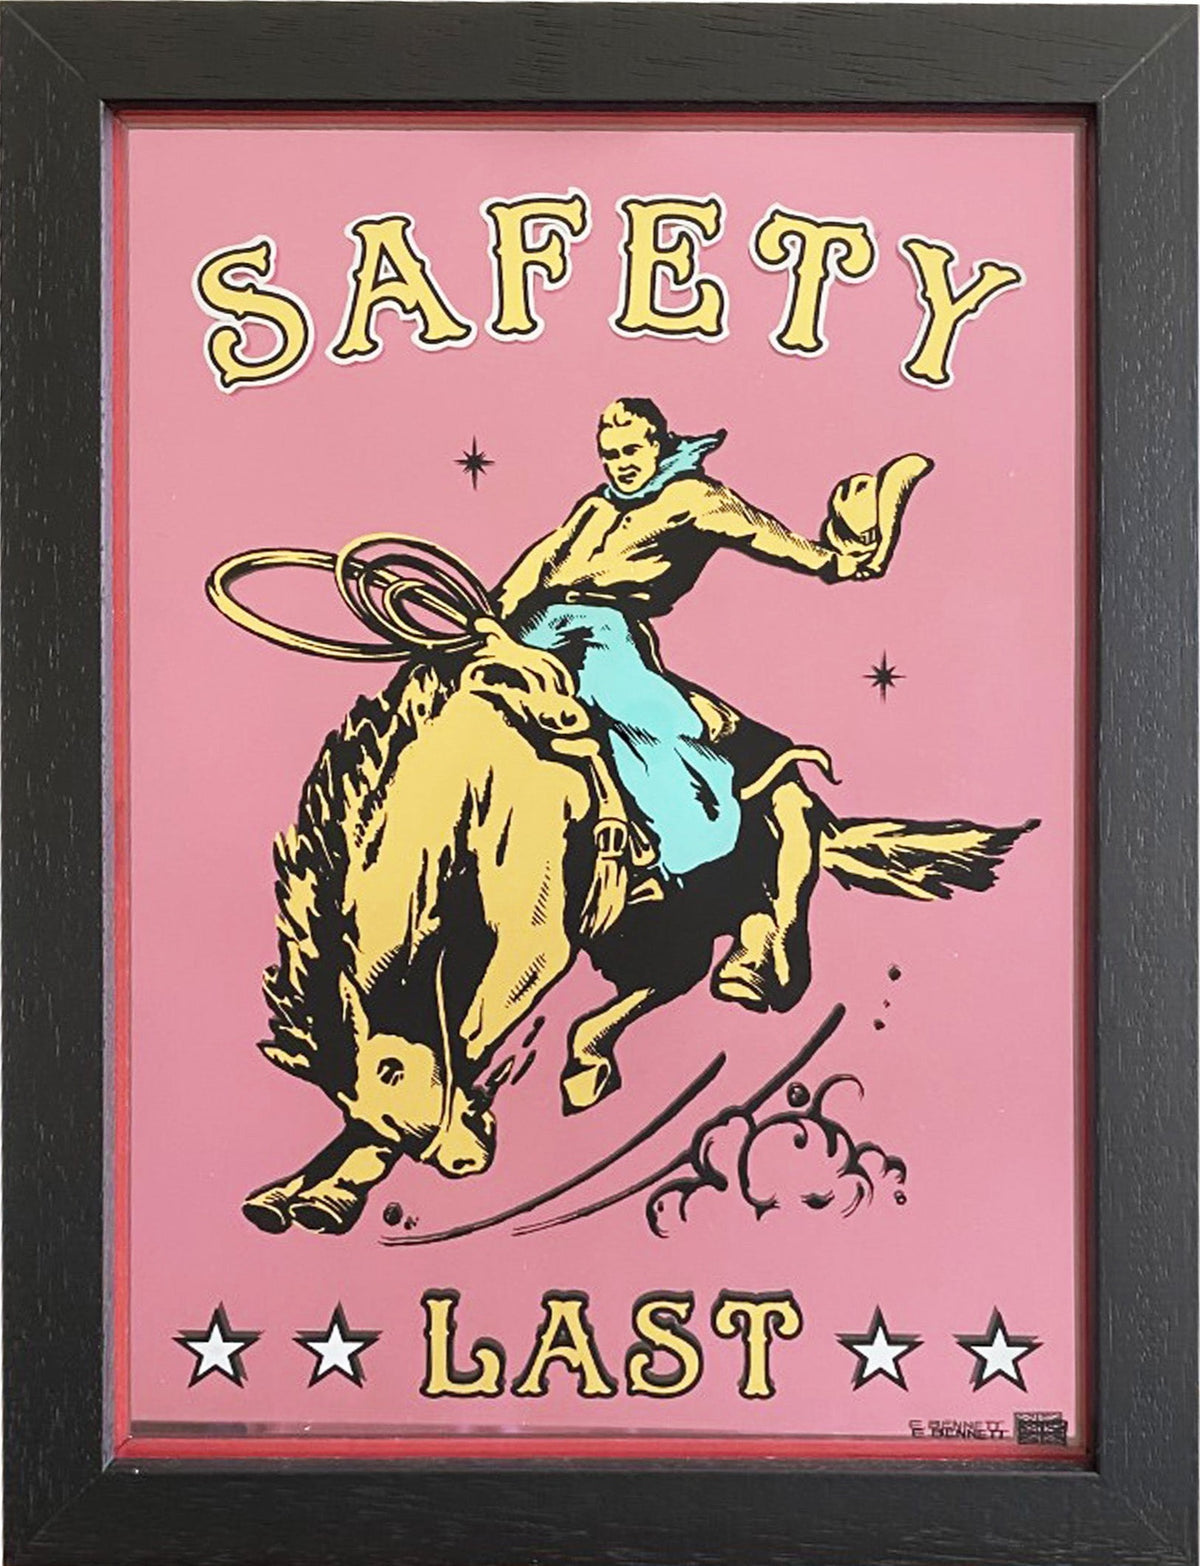 Safety Last - Hot Pink by Eddy Bennett